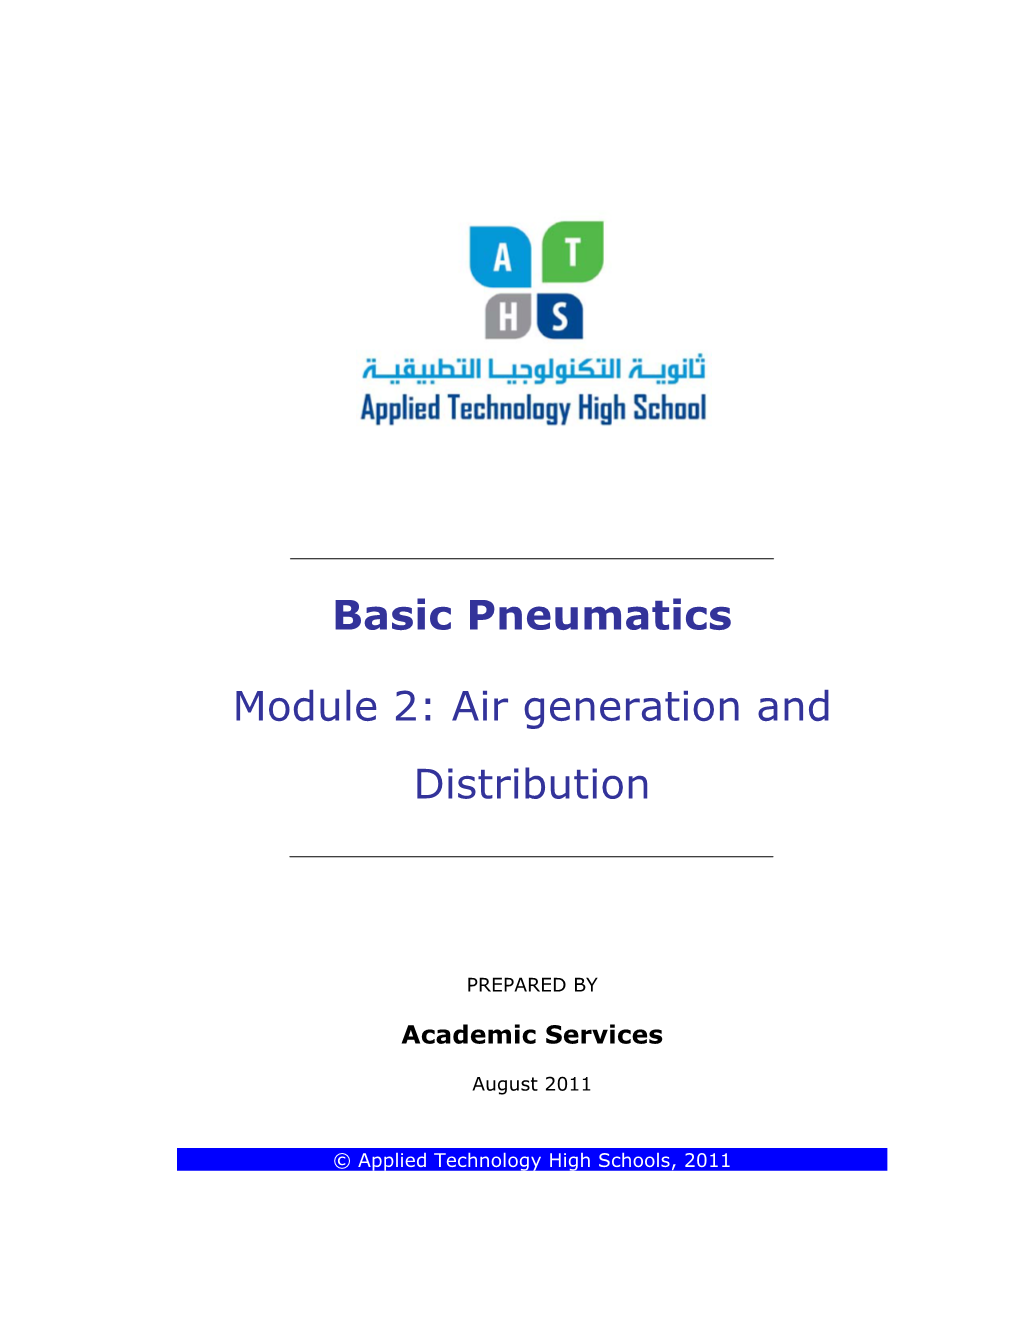 Basic Pneumatics Module 2: Air Generation and Distribution